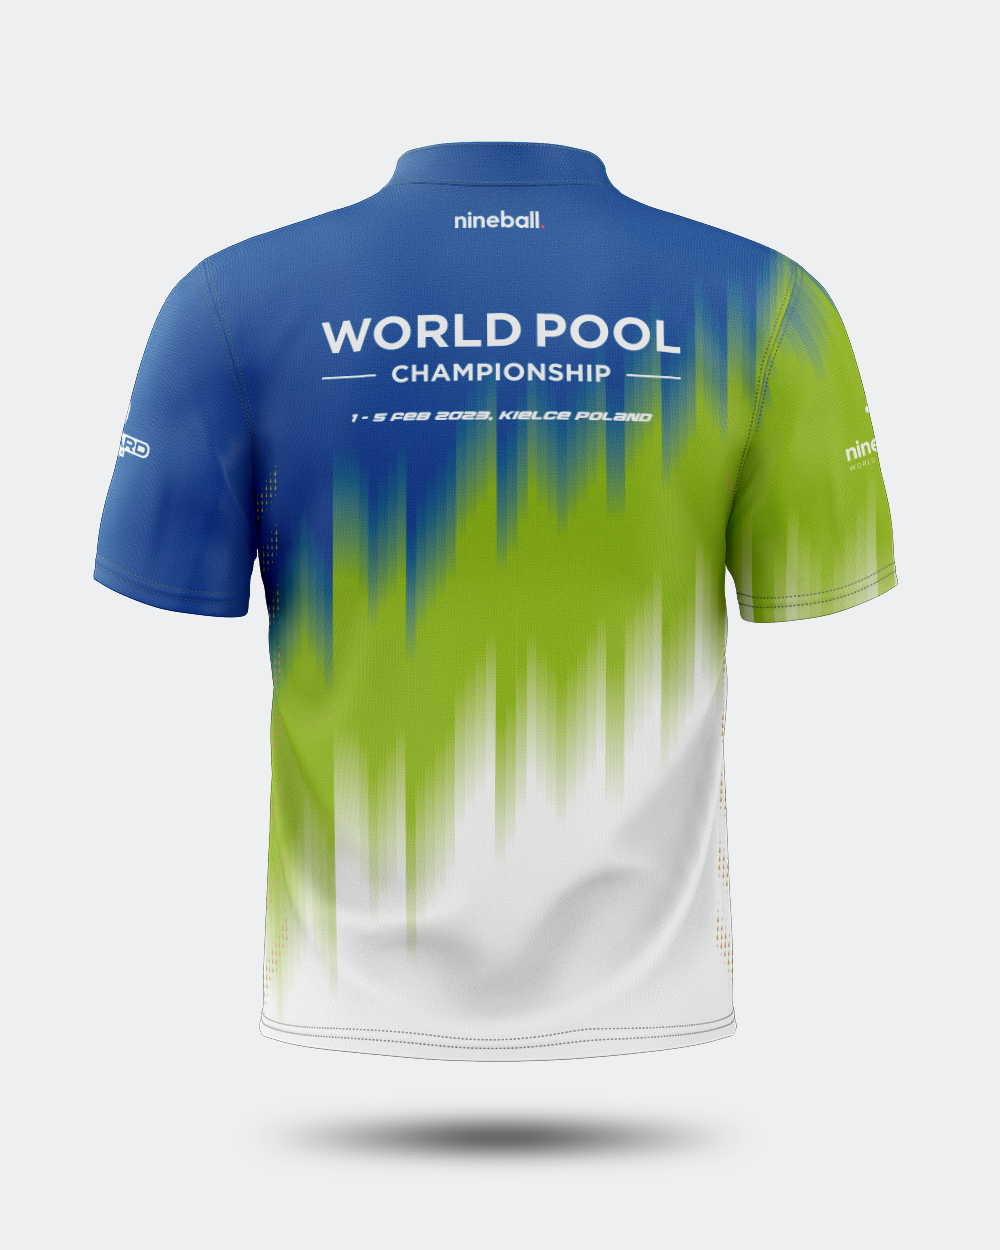 2023 Nineball World Pool Championship Jerseys